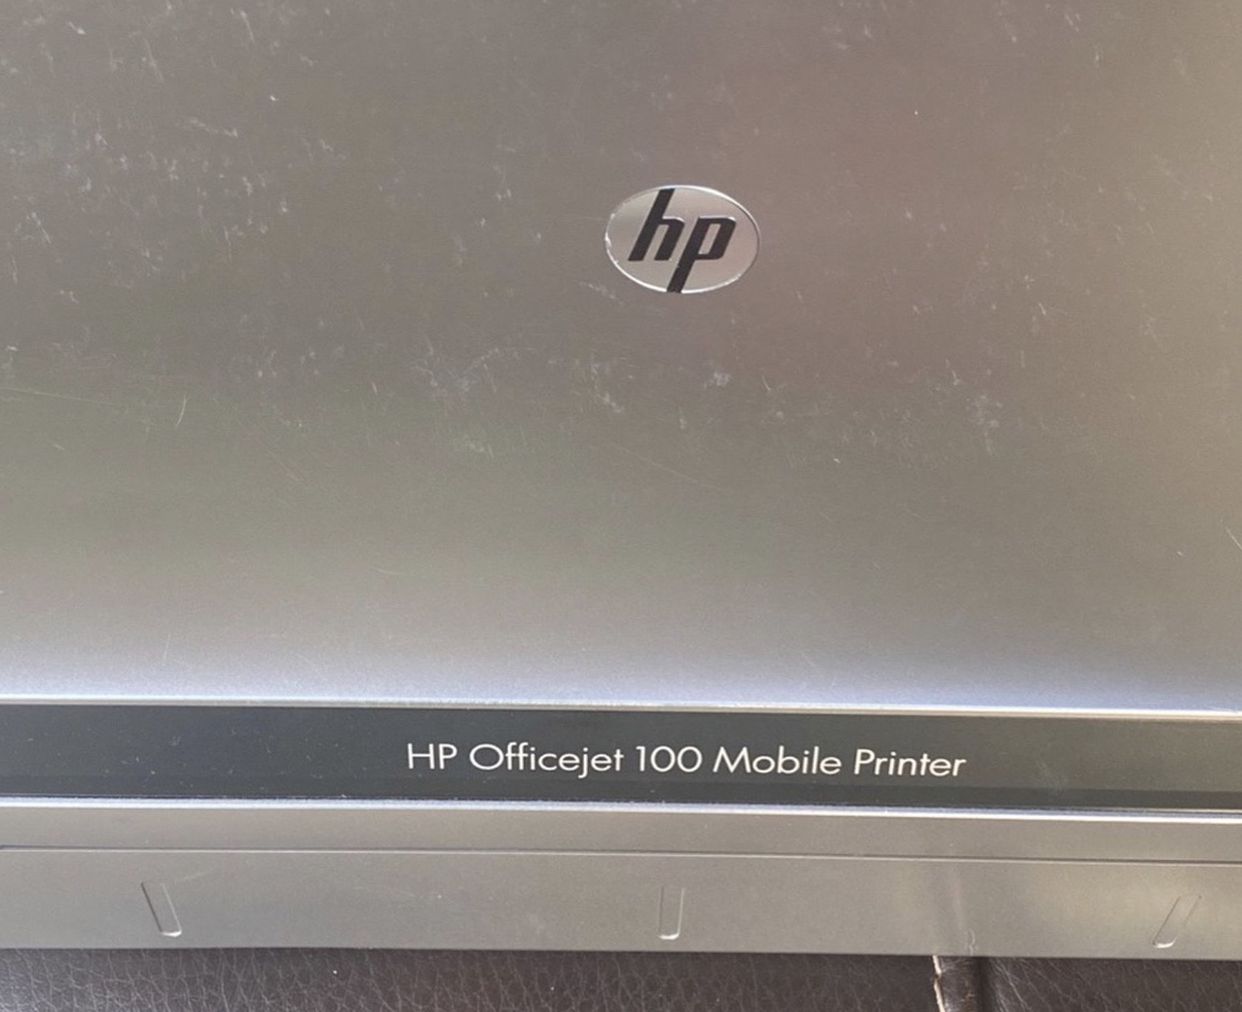 HP Office jet 100 Mobile Printer